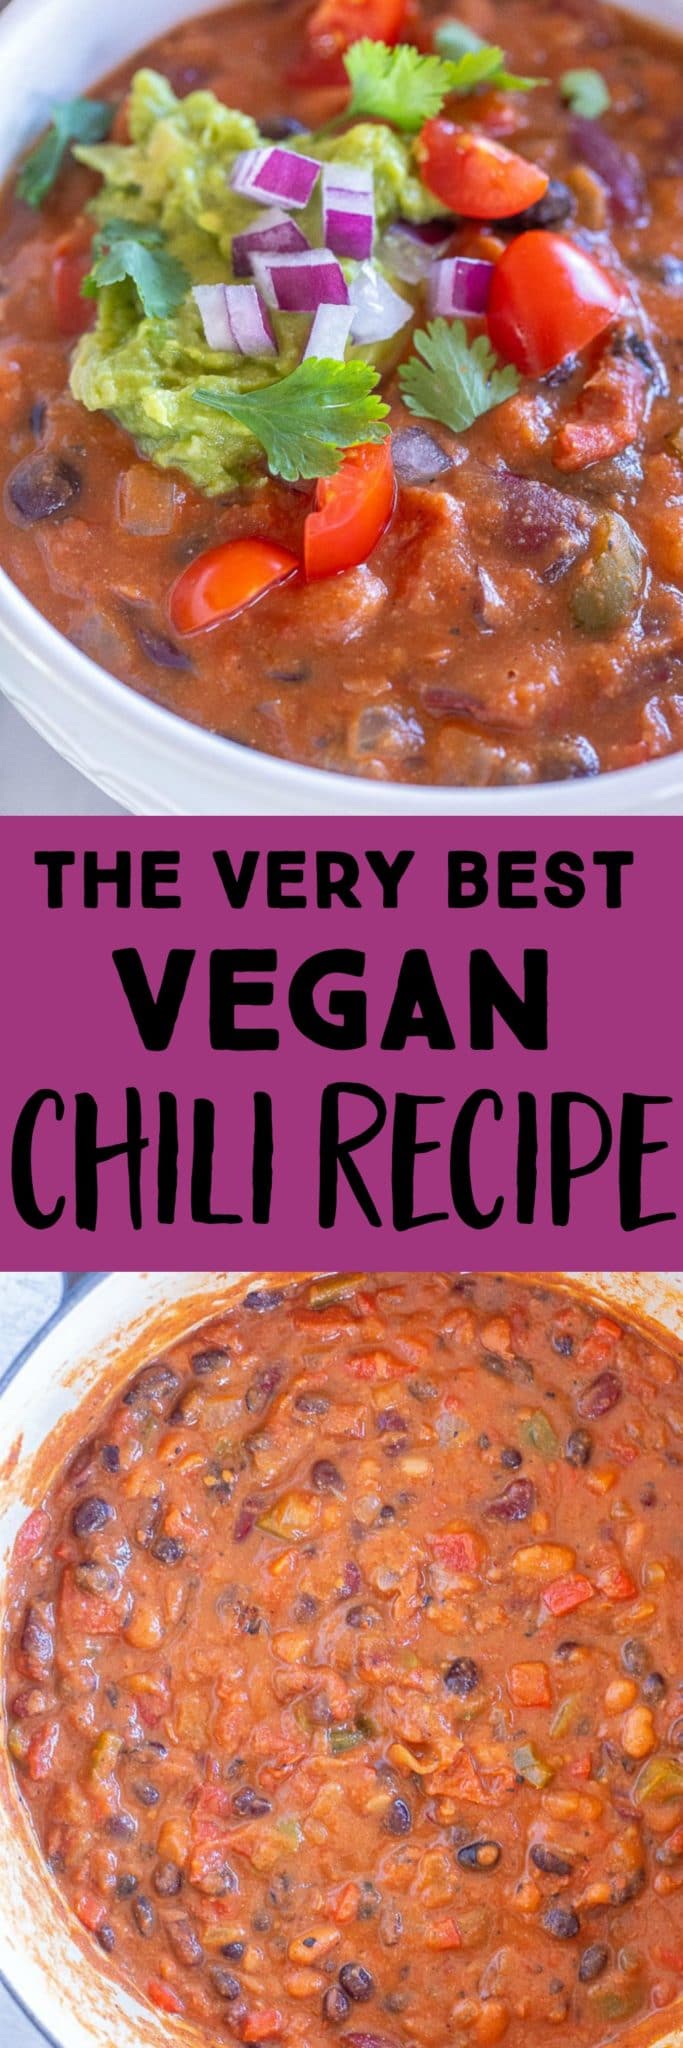 The Best Vegan Chili Recipe - She Likes Food